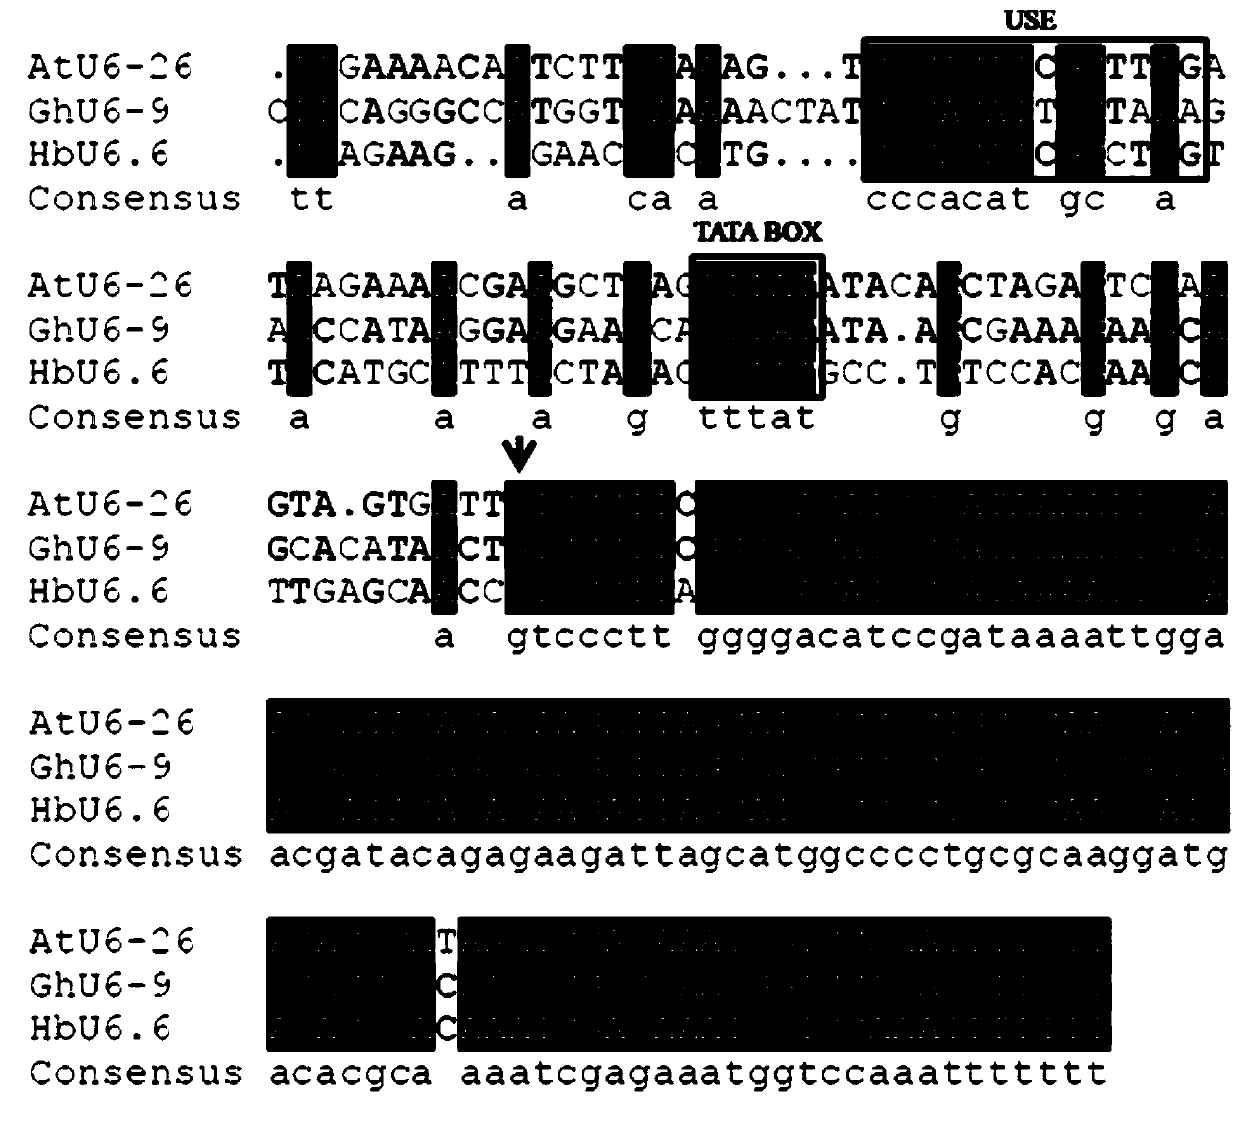 Rubber tree U6 gene promoter proHbU6.6 and cloning and application of rubber tree U6 gene promoter proHbU6.6